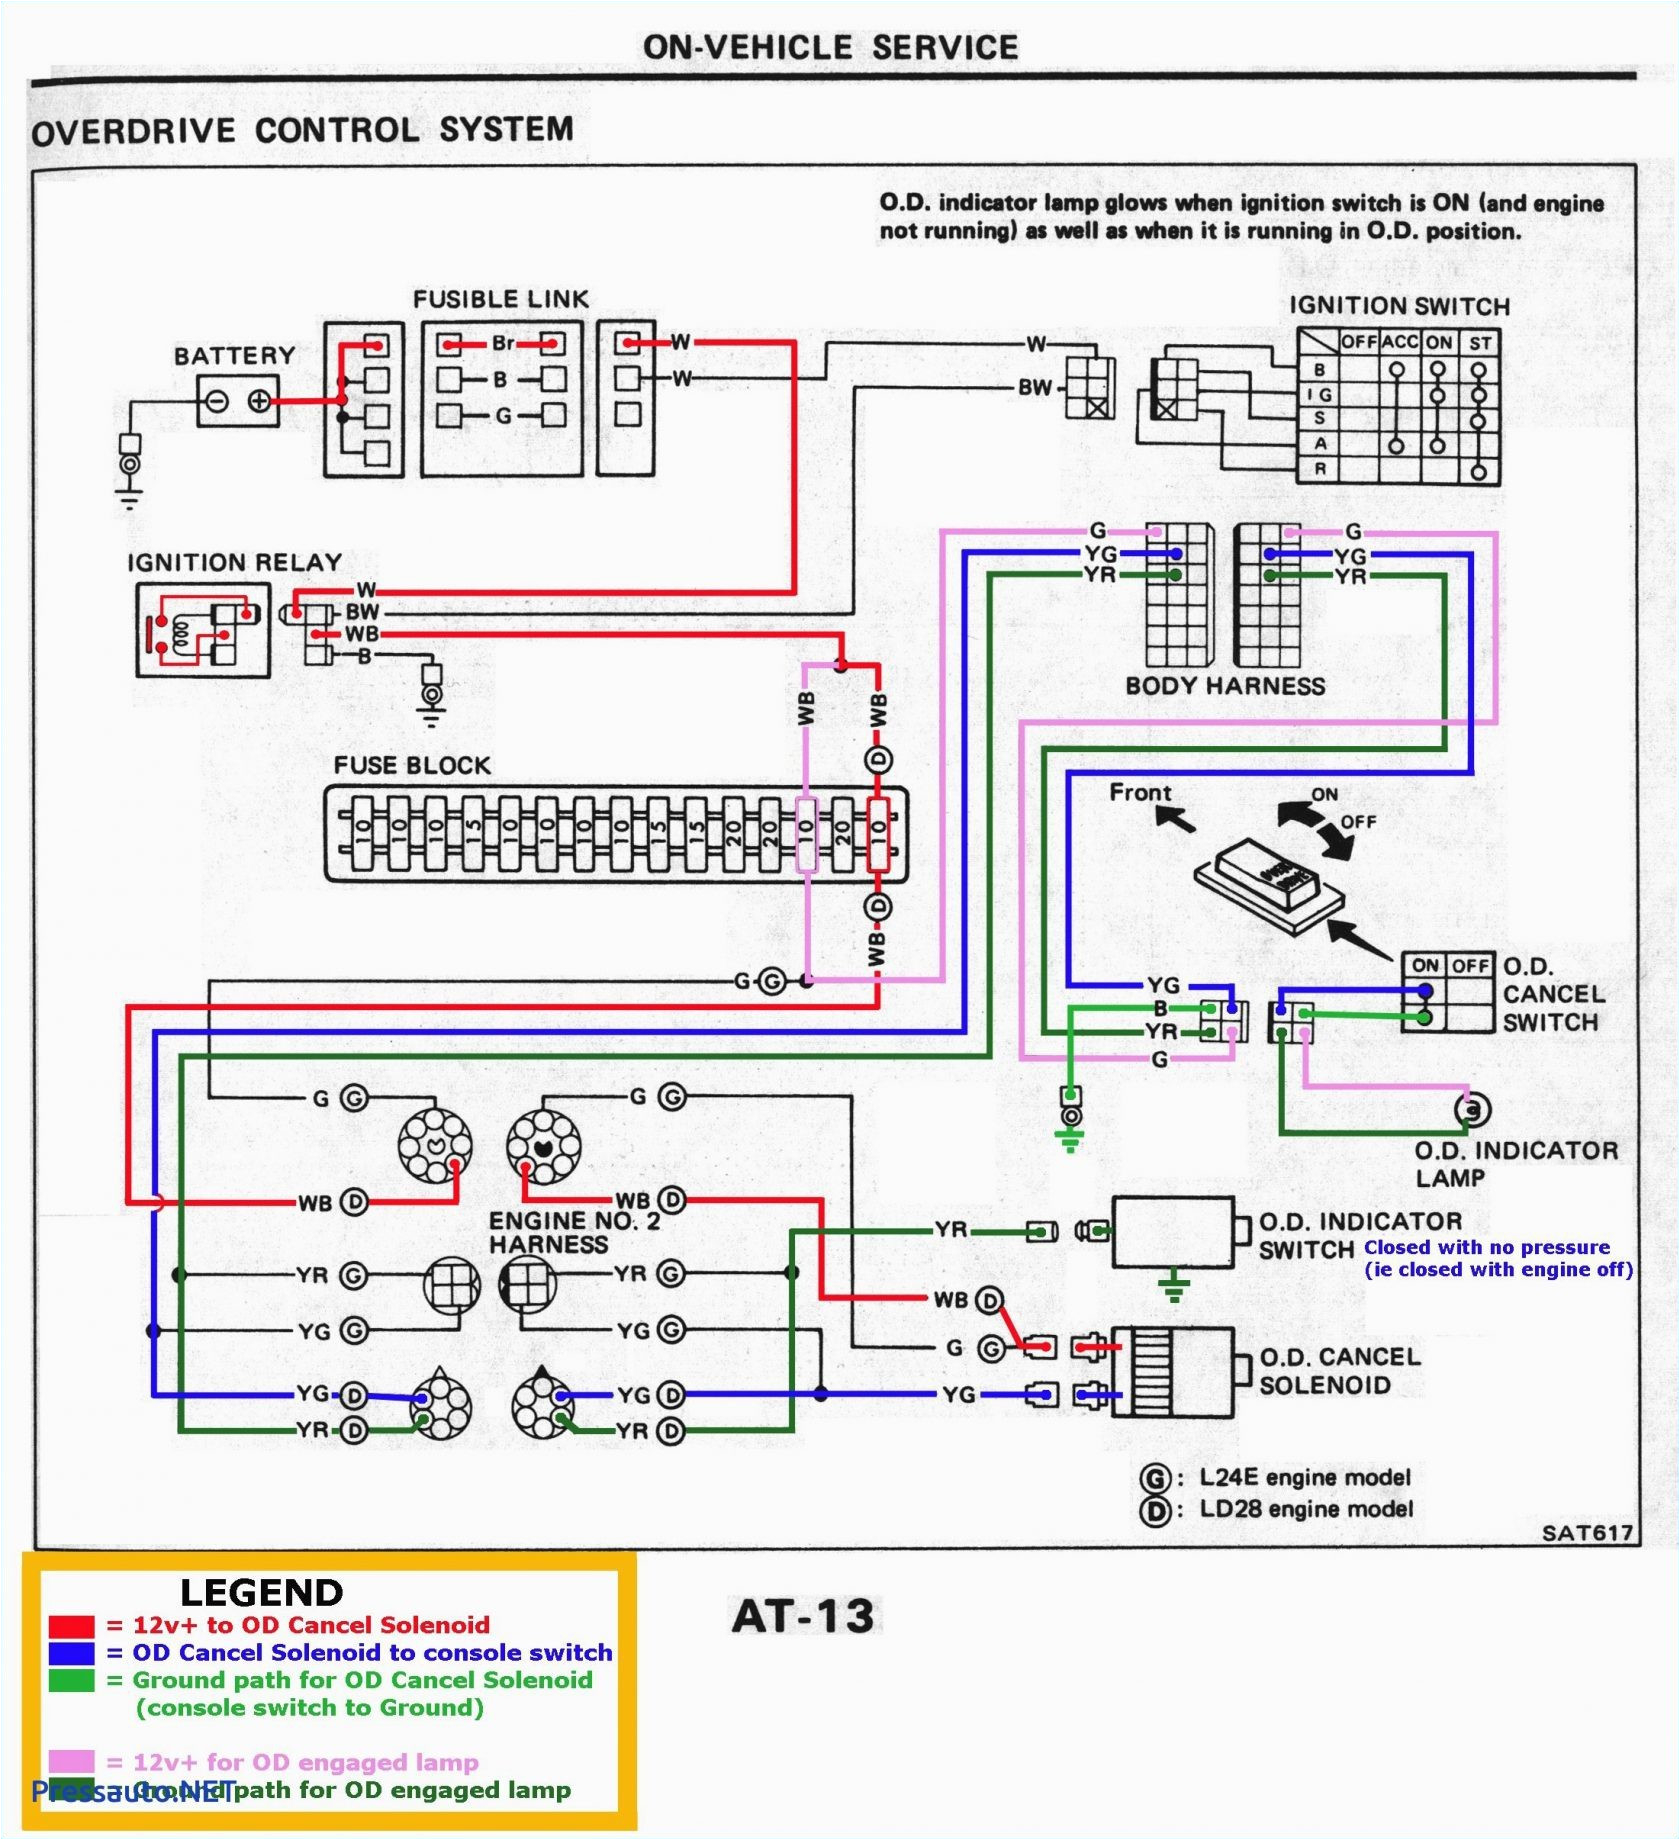 4l80e Wiring Diagram 4l60e Corvette Transmission Wiring Diagram Wiring Diagram Inside